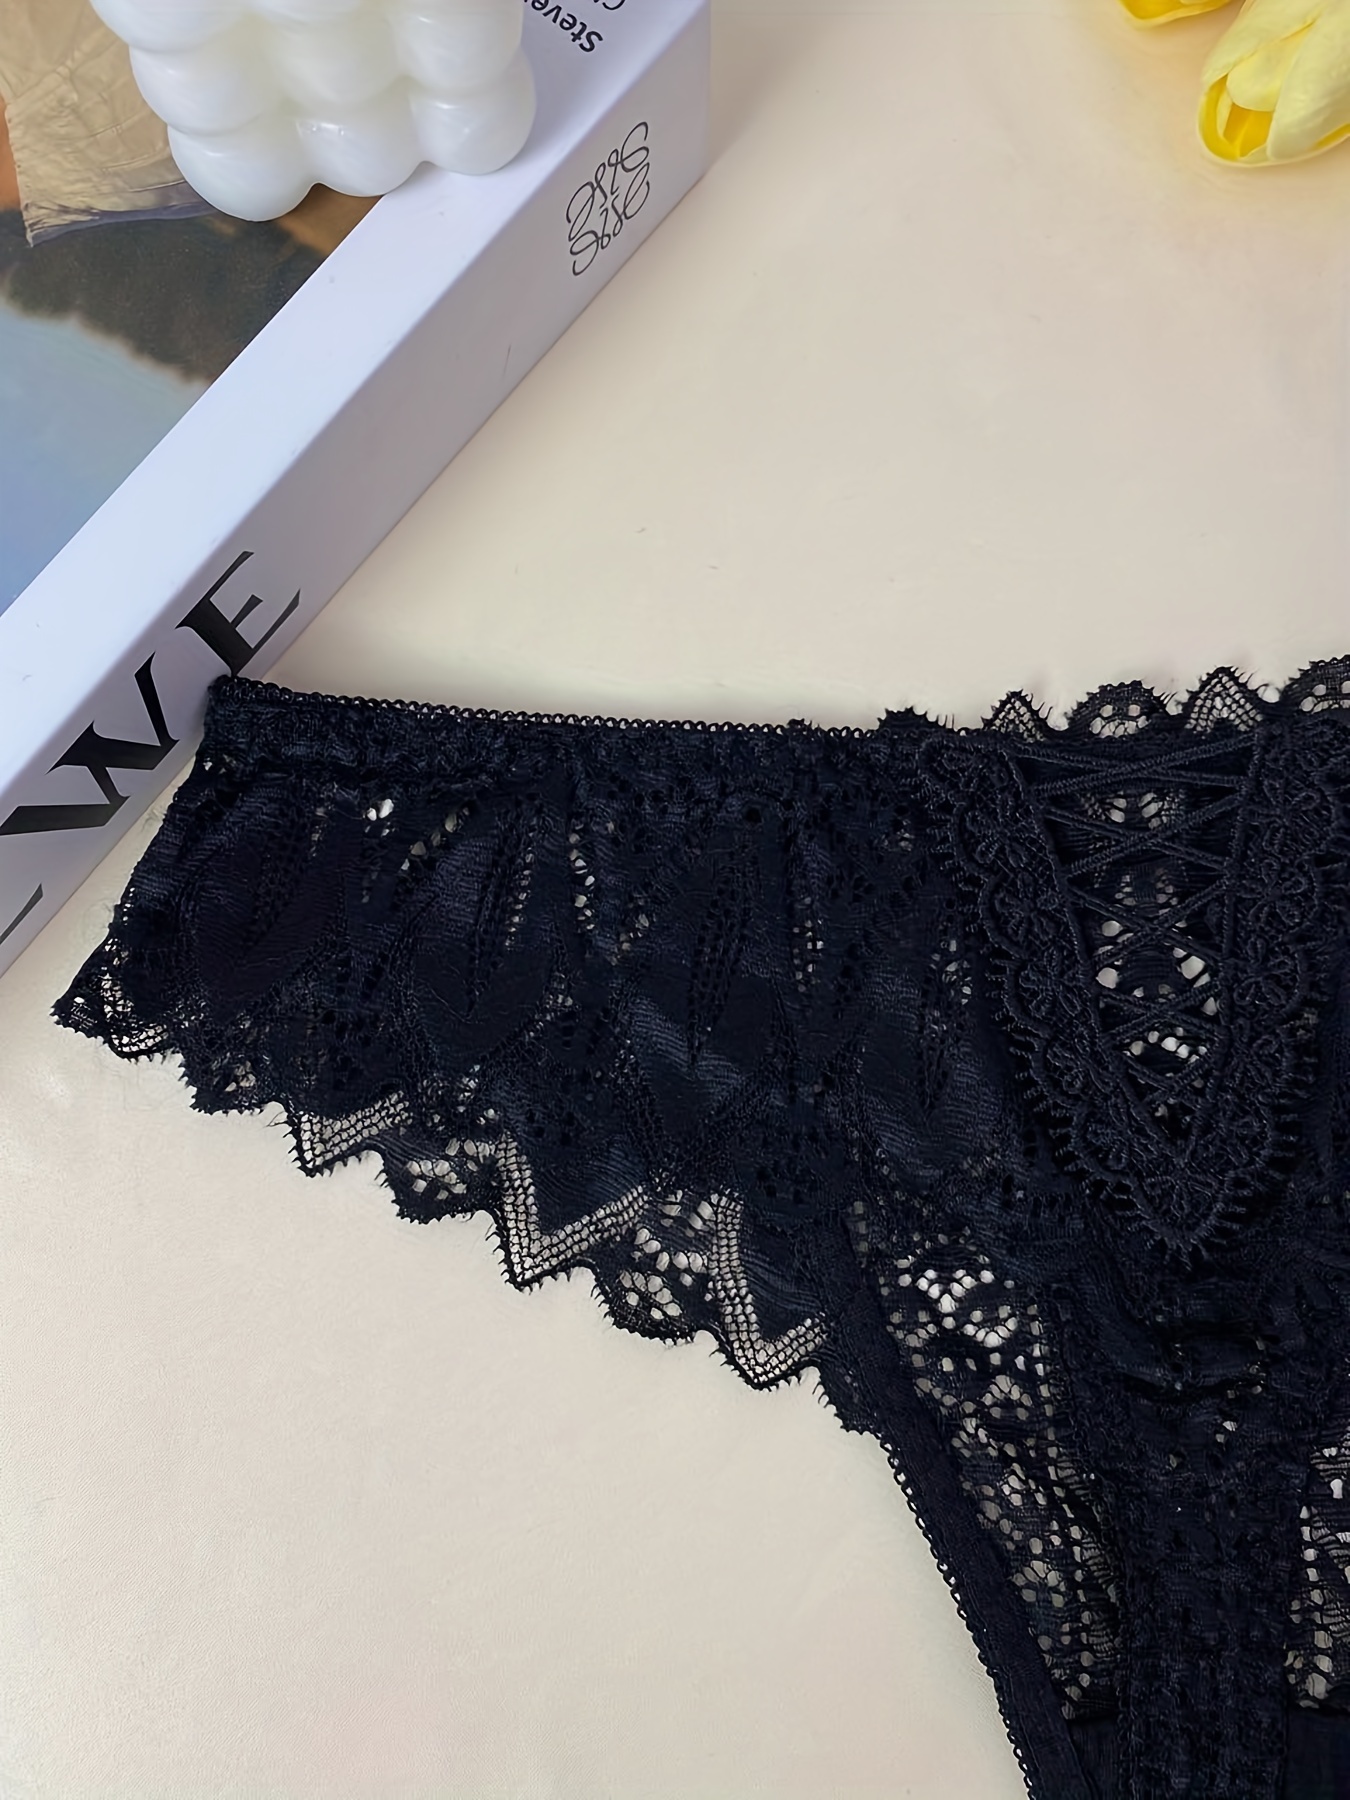 Women Sexy Lace See-through G-string Sheer Thongs Briefs Underwear